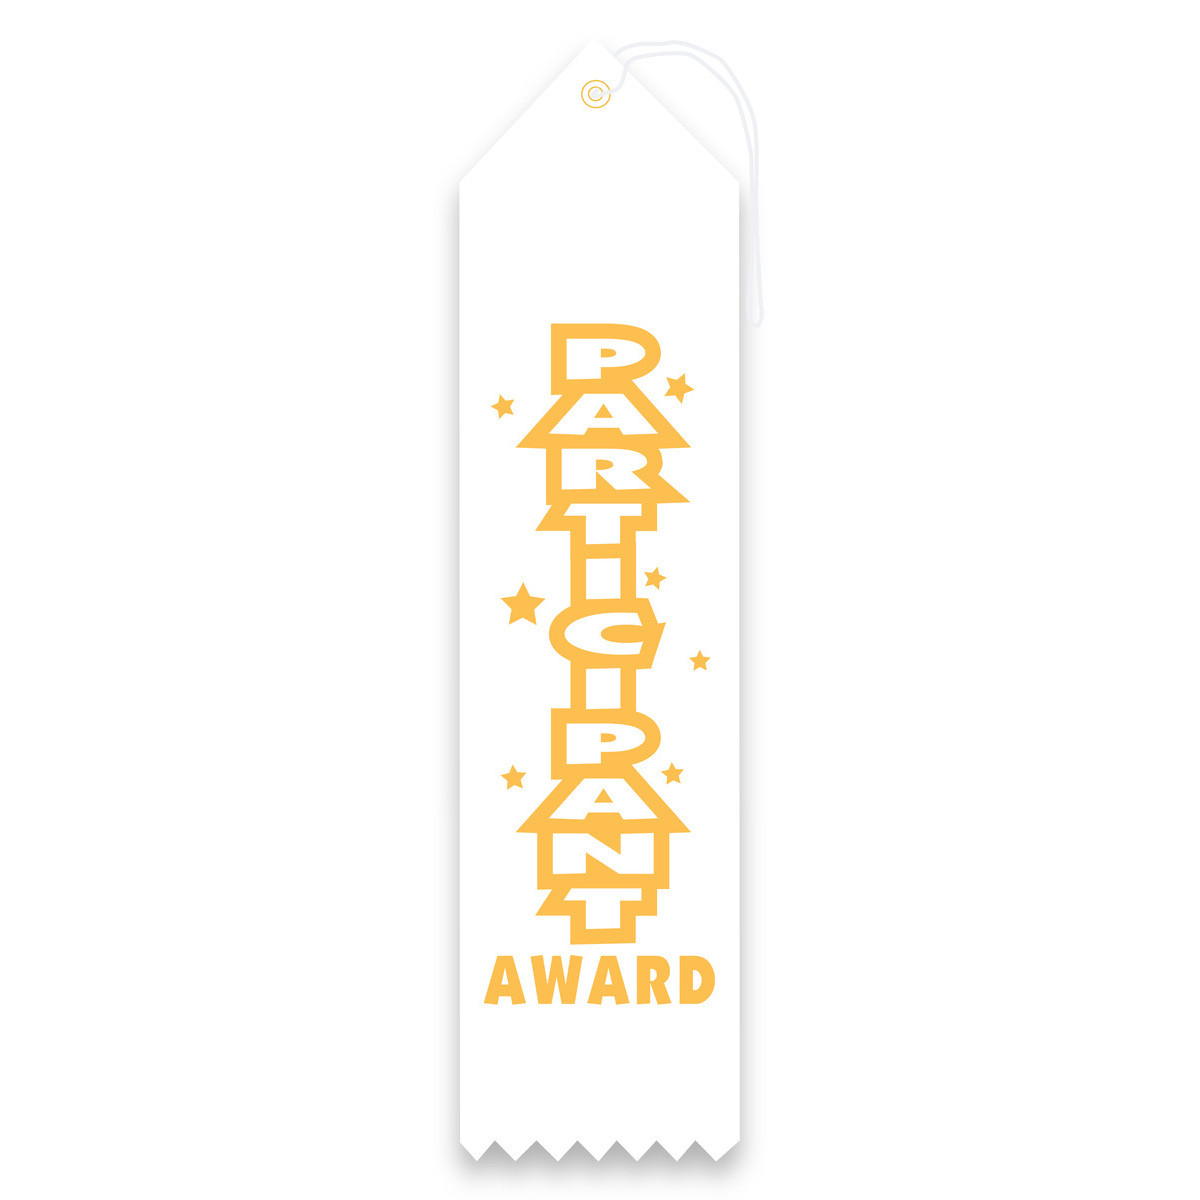 Carded Ribbon - Participant Award